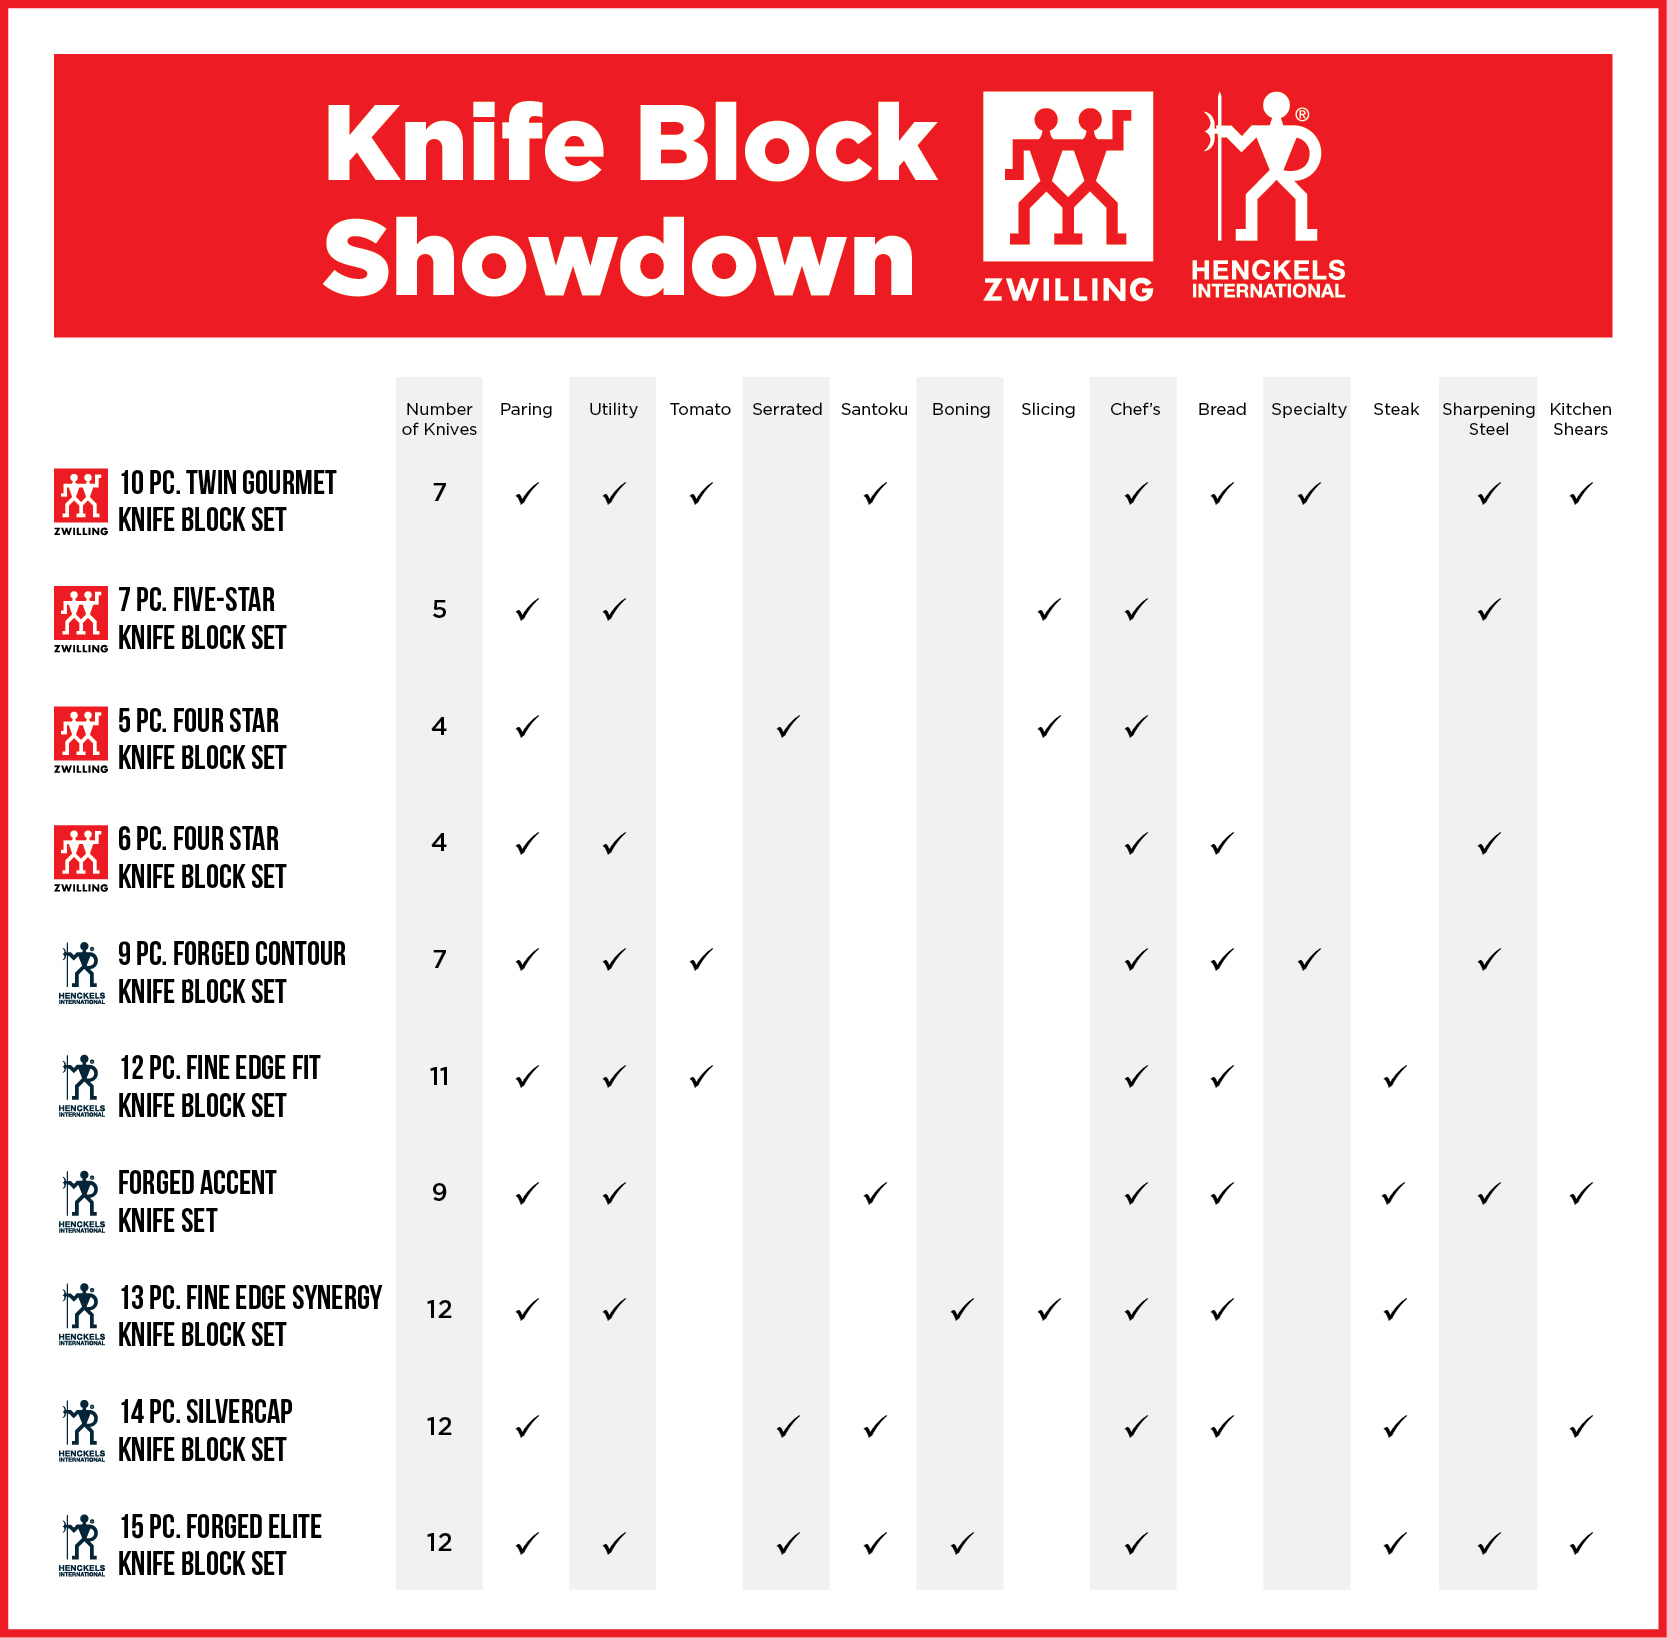 Knife Comparison Chart